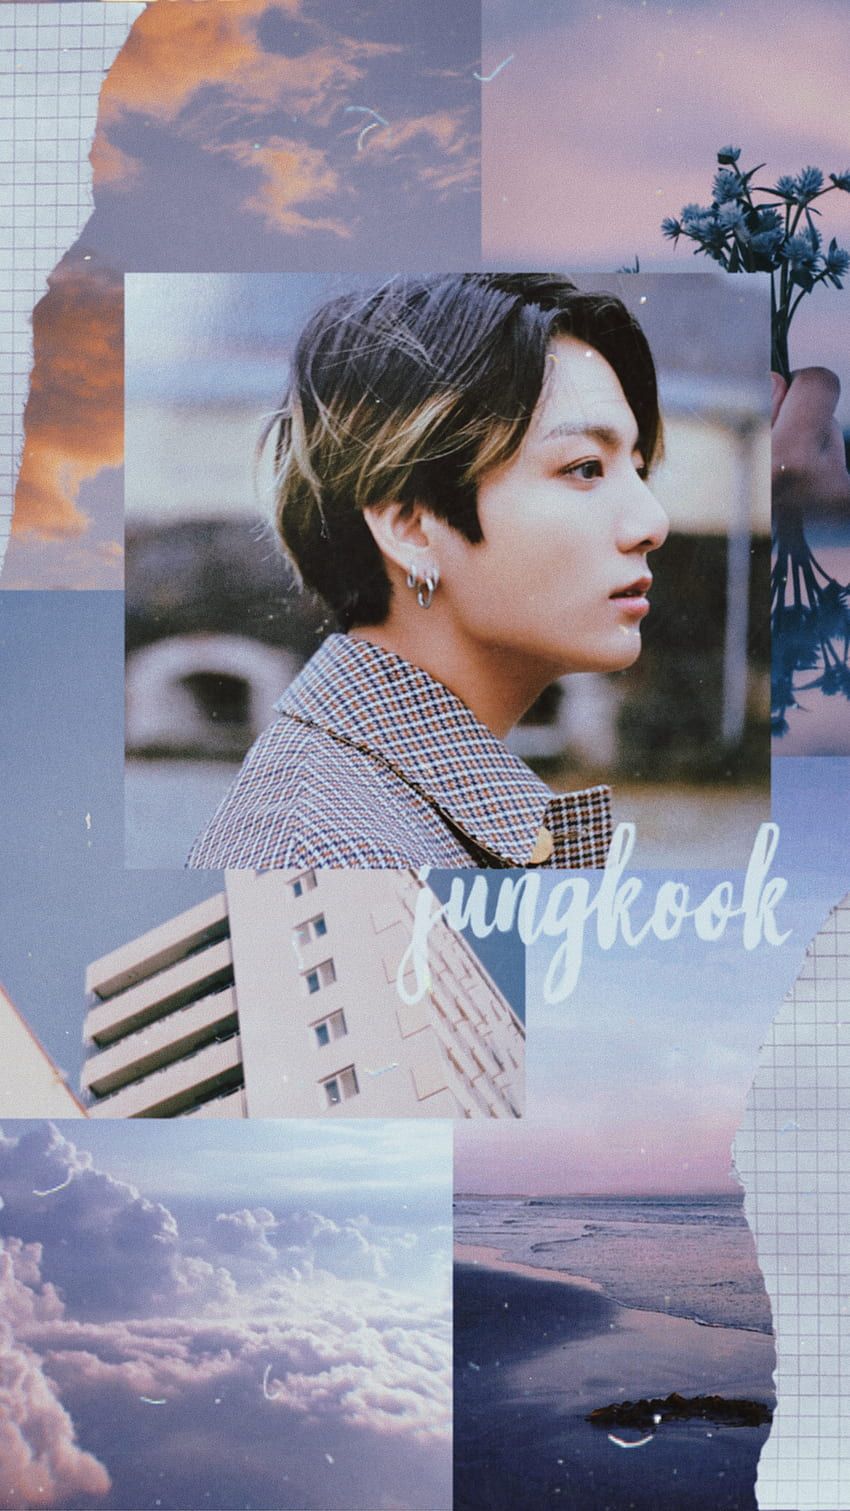 Jungkook wallpaper i made for my phone! - Jungkook